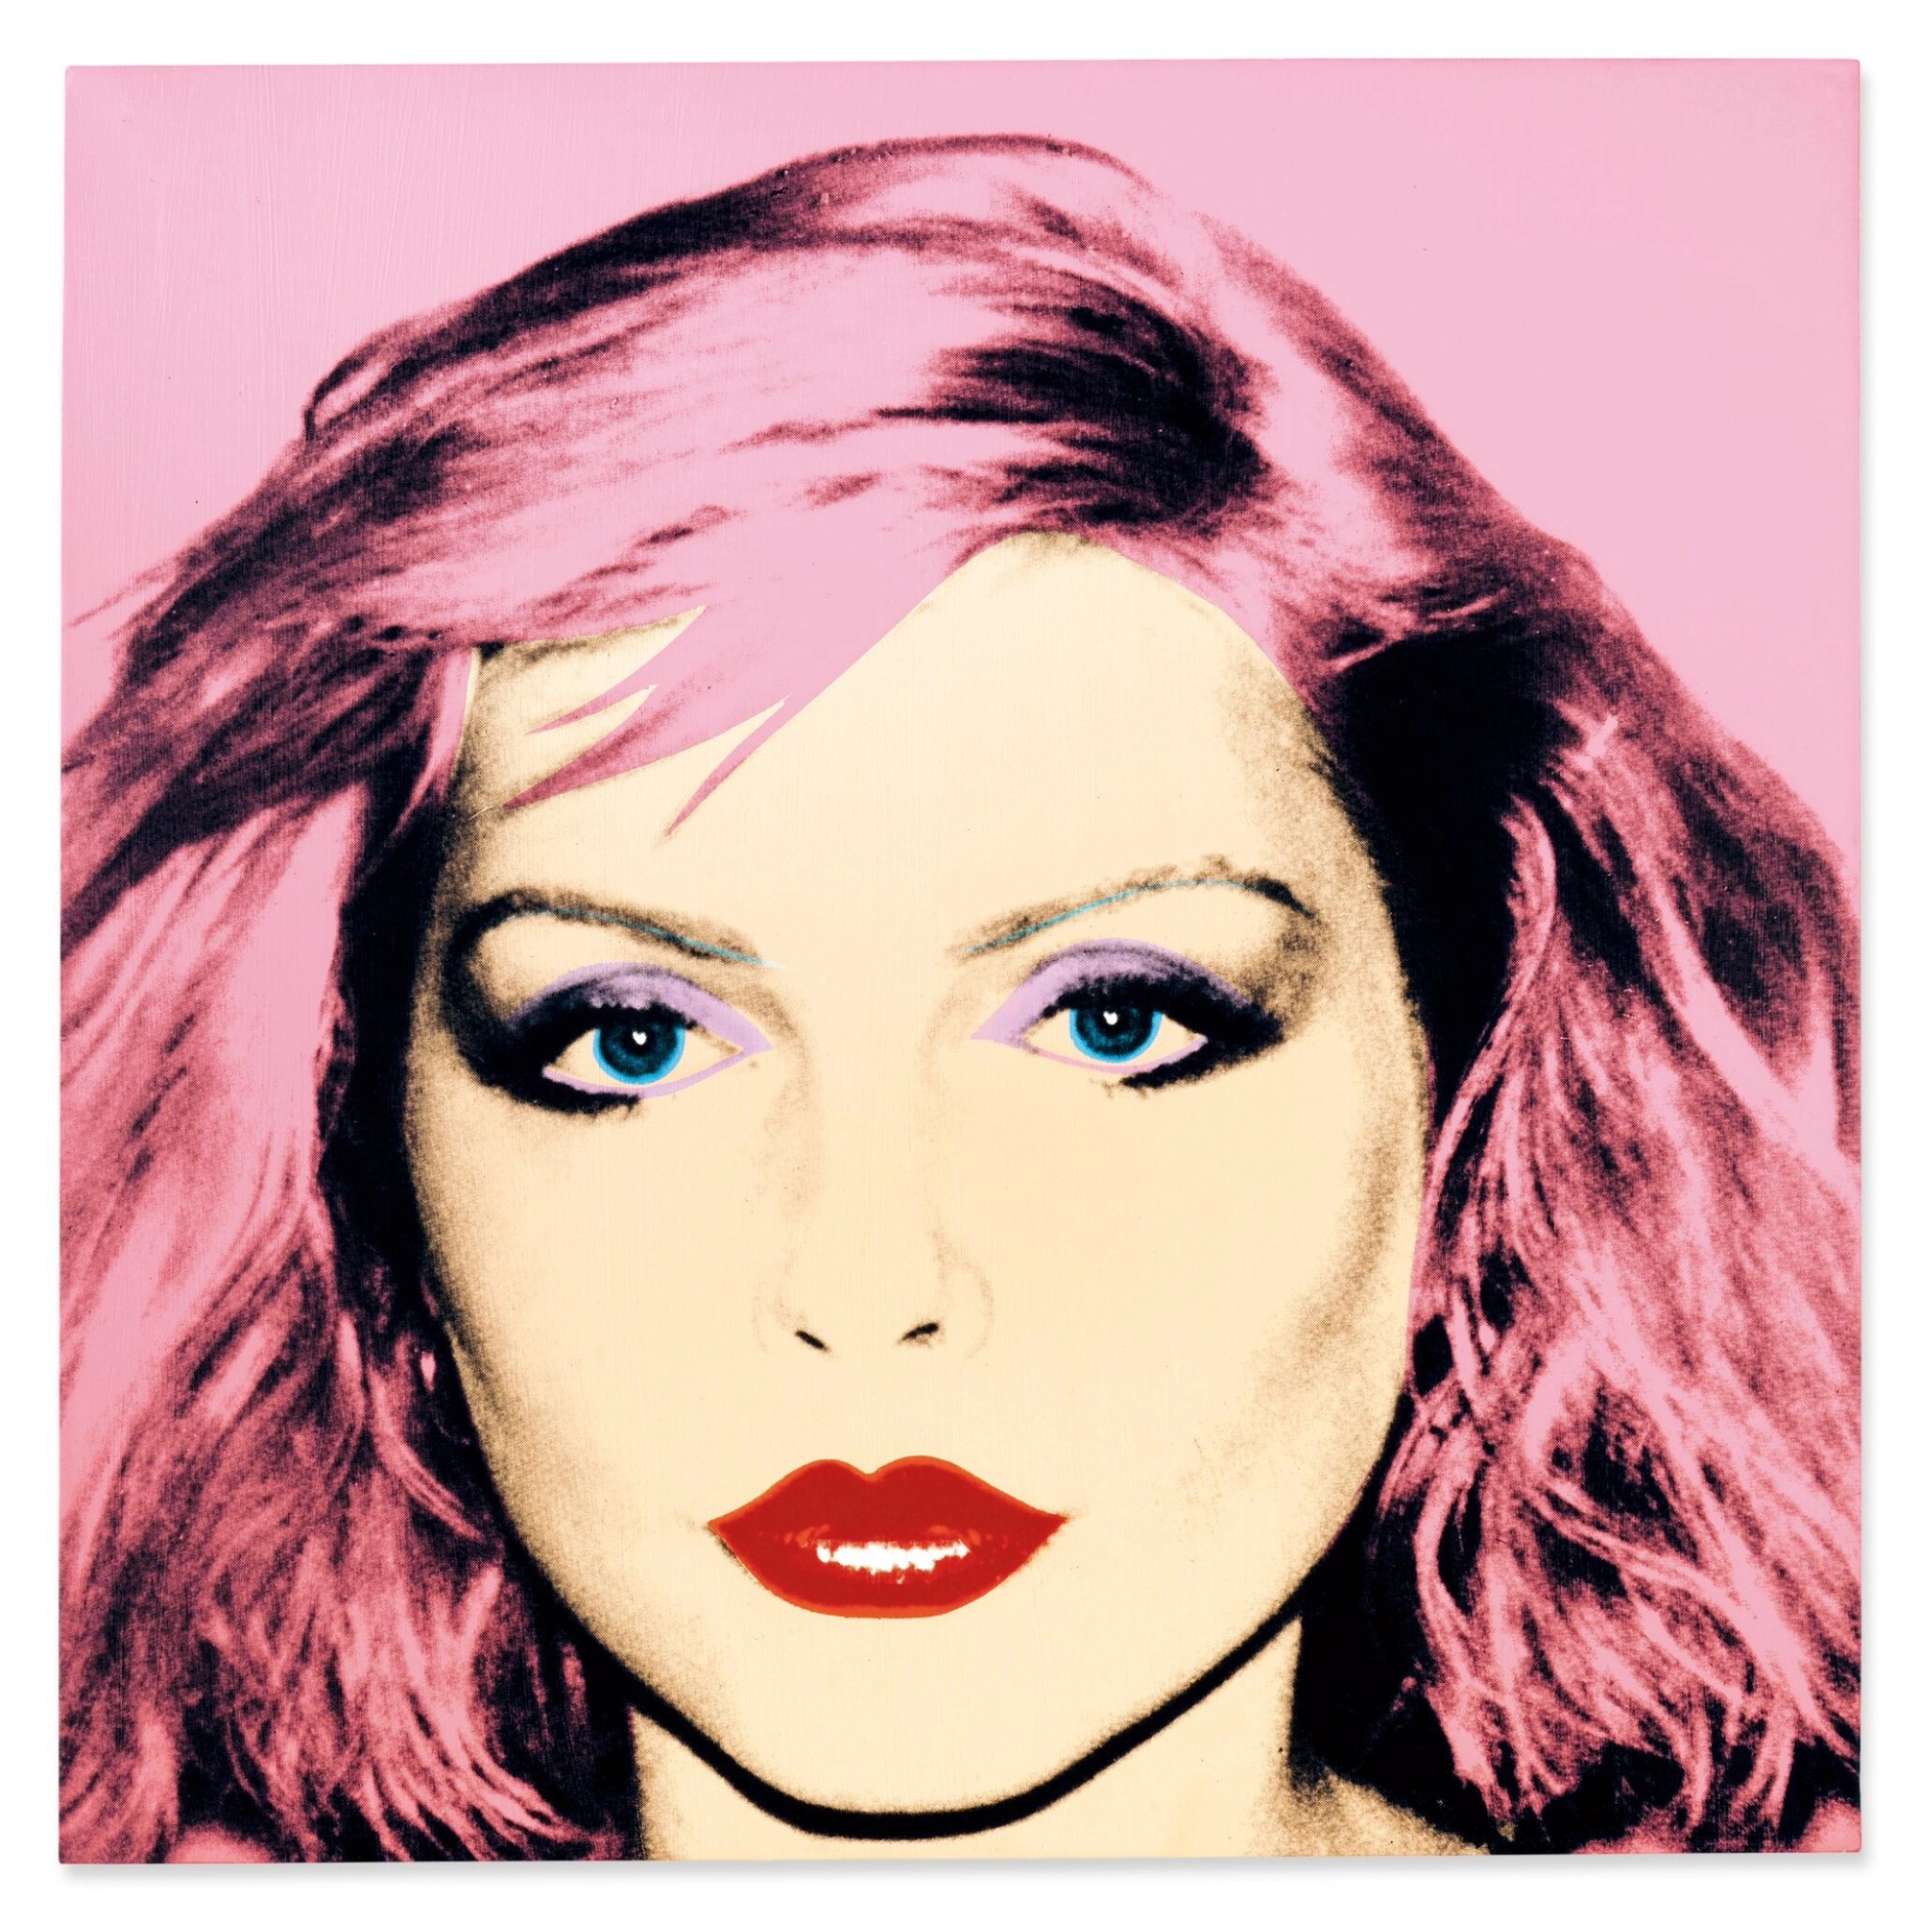 Image © Sotheby's / Debbie Harry by Andy Warhol - MyArtBroker